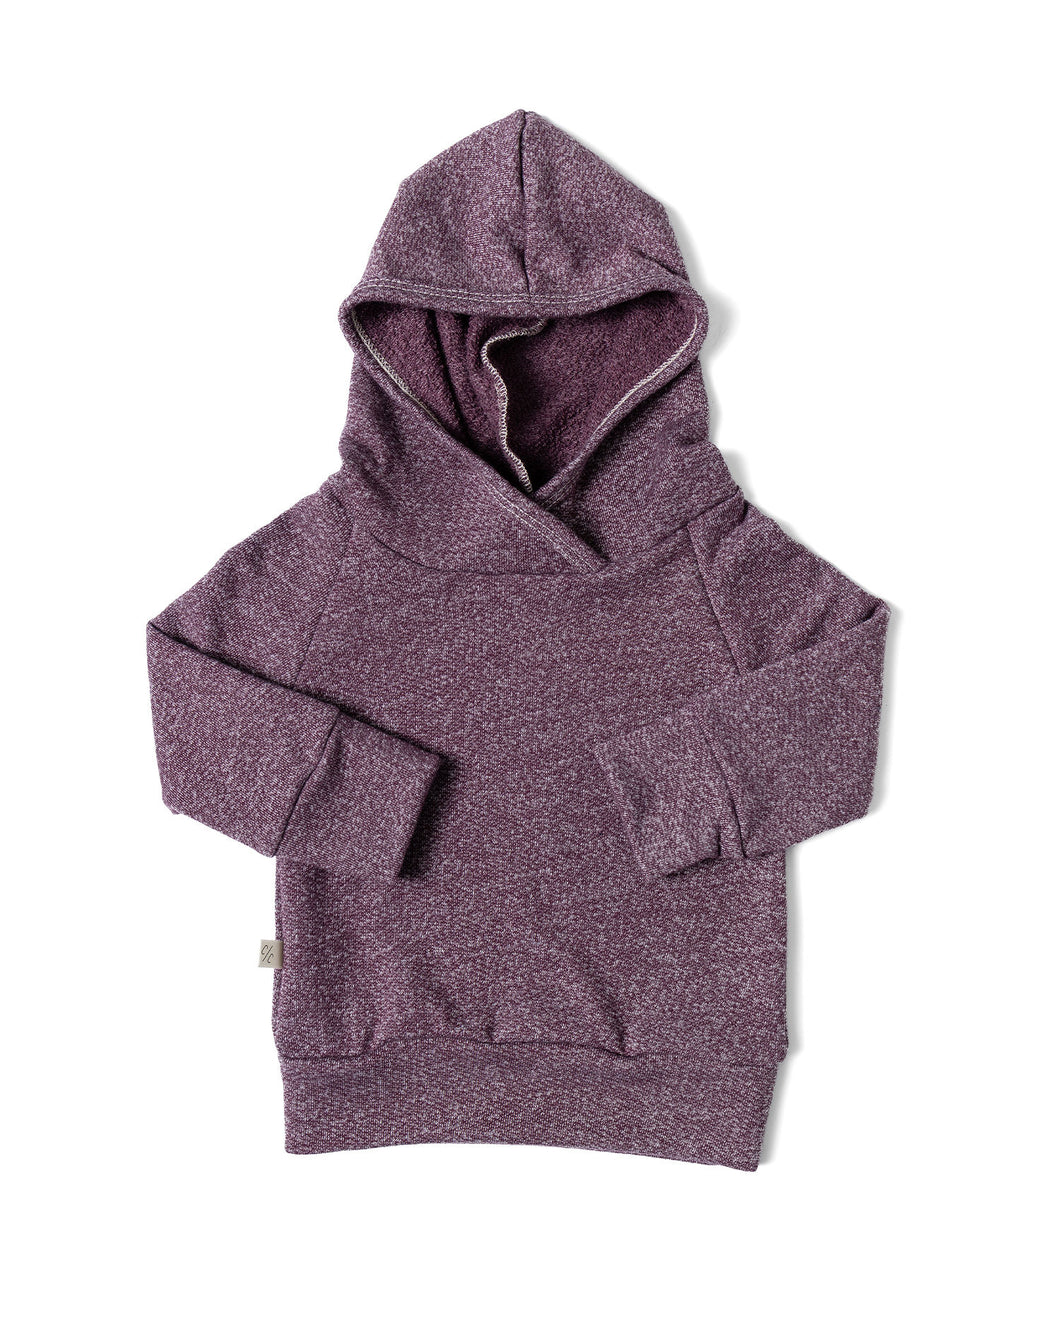 trademark raglan hoodie - purple heather